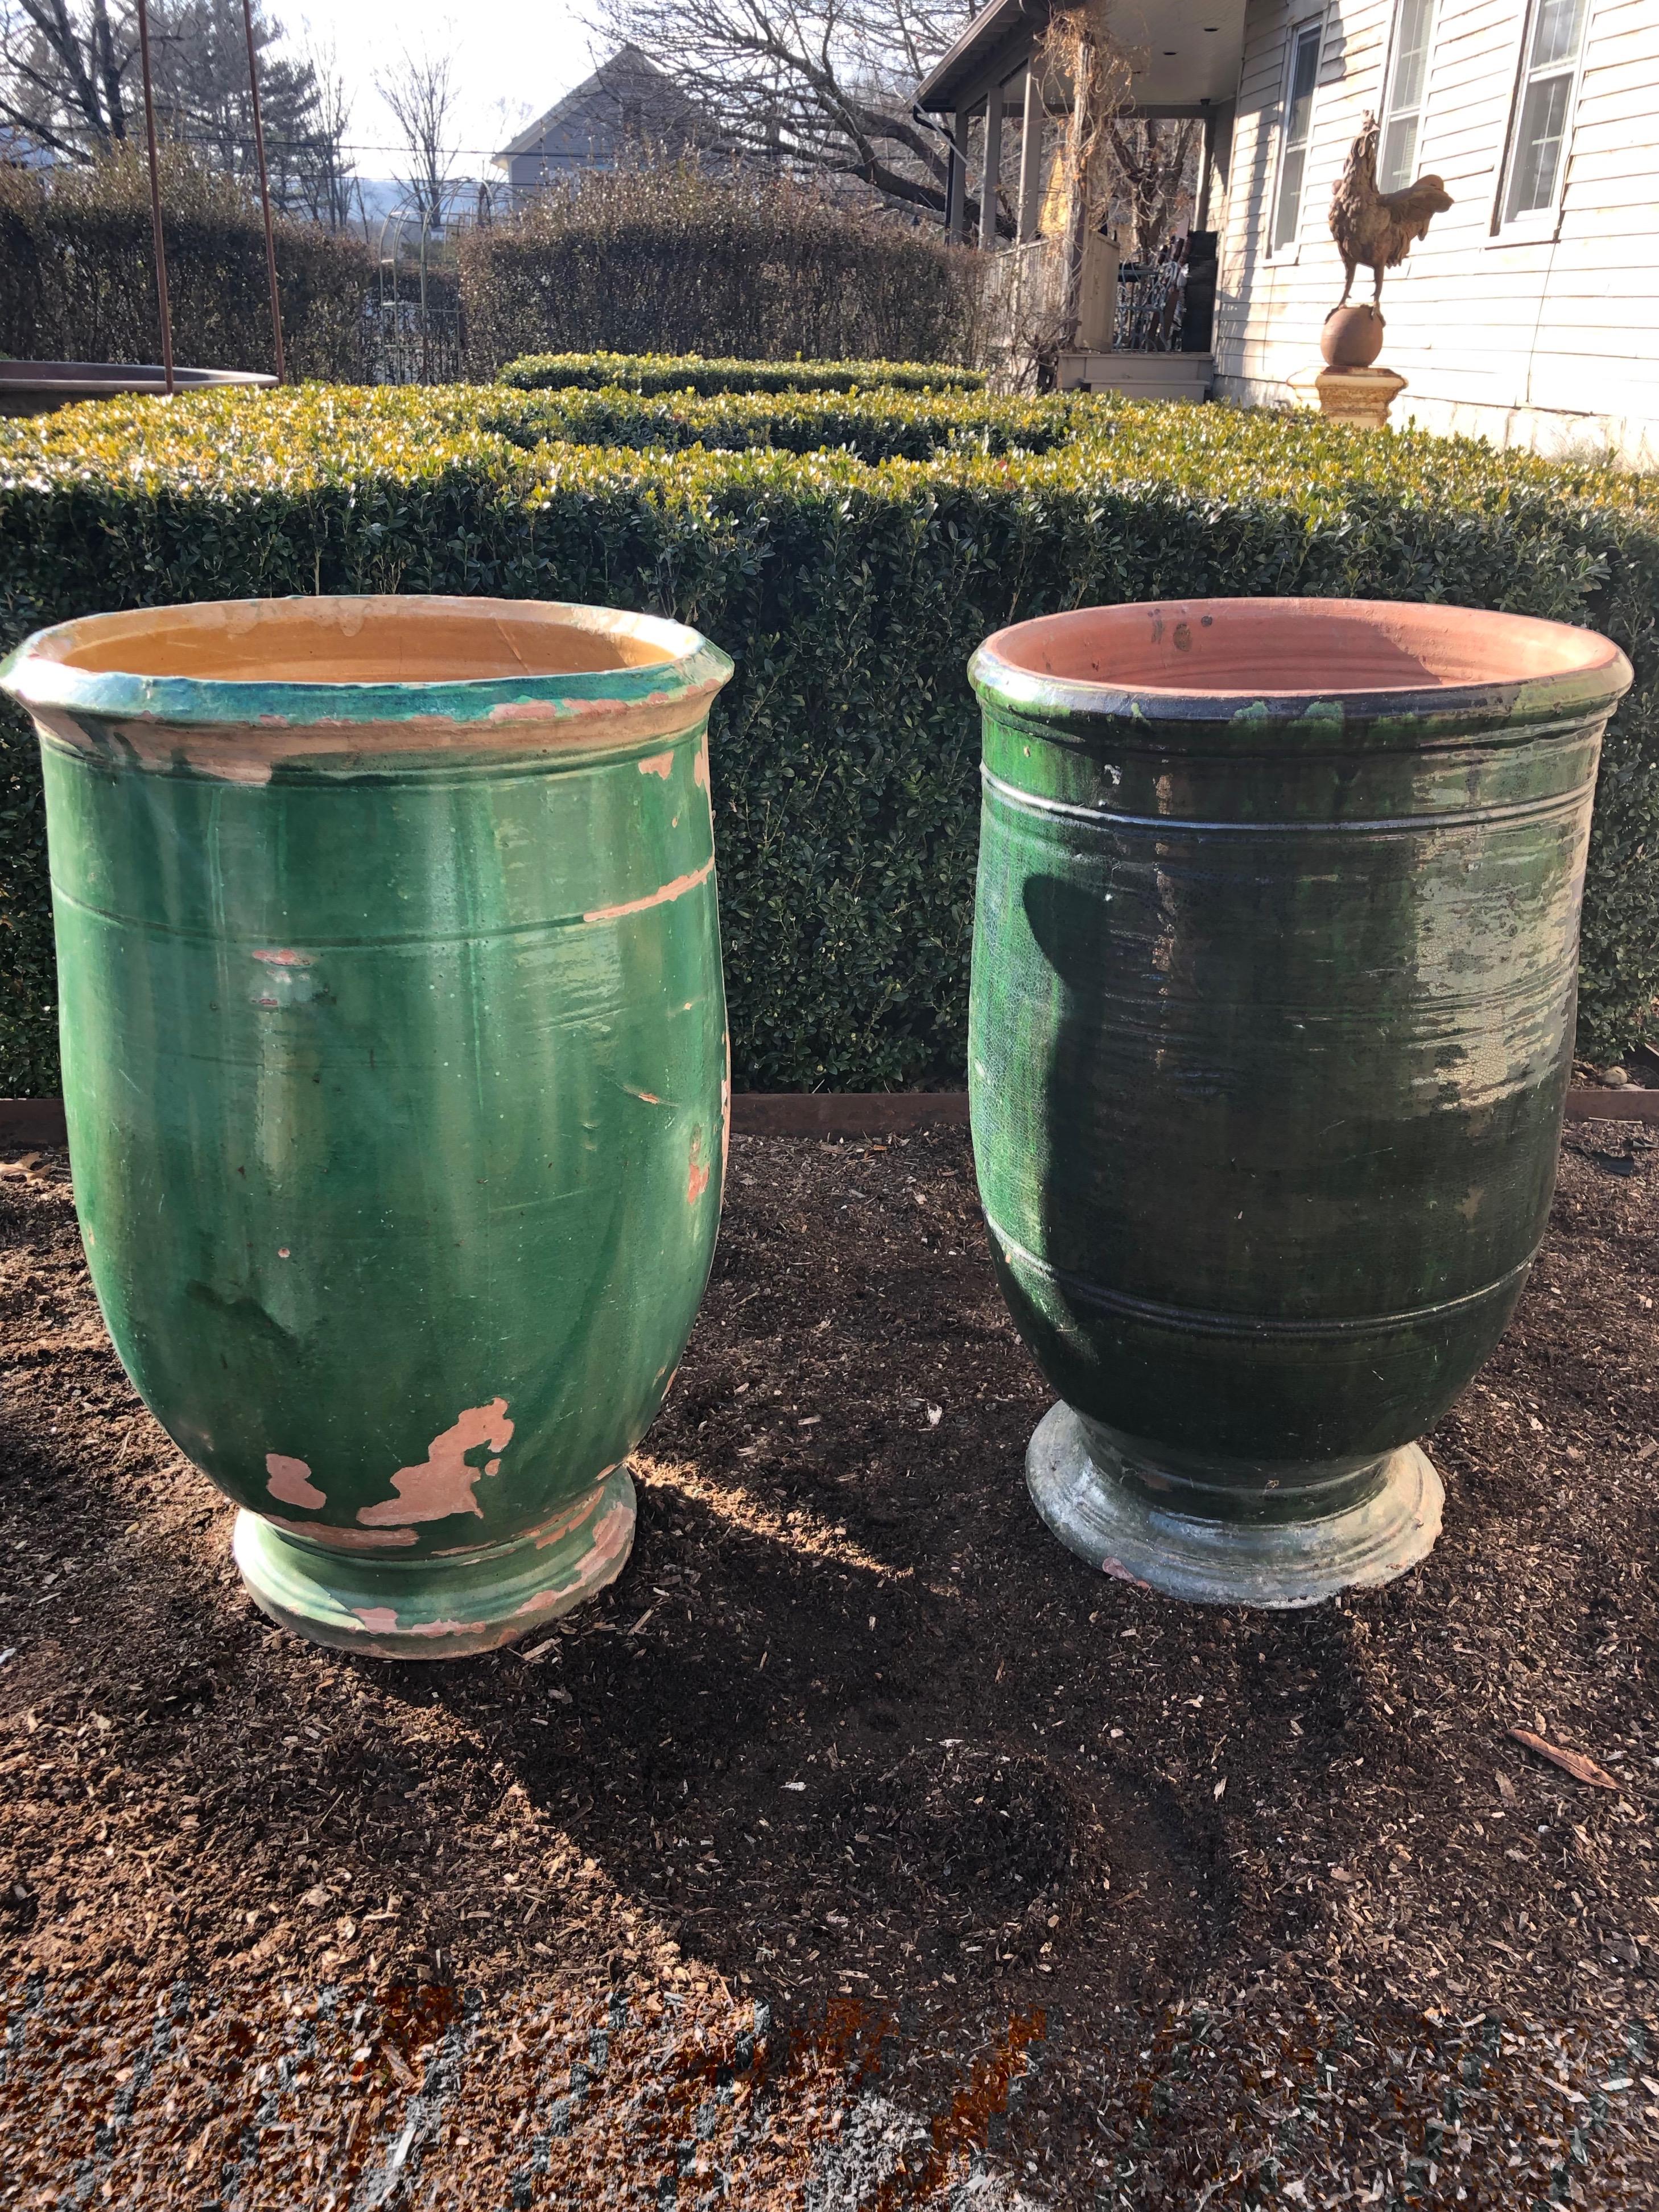 French 19th Century Green-Glazed Terracotta Pot from Apt 9